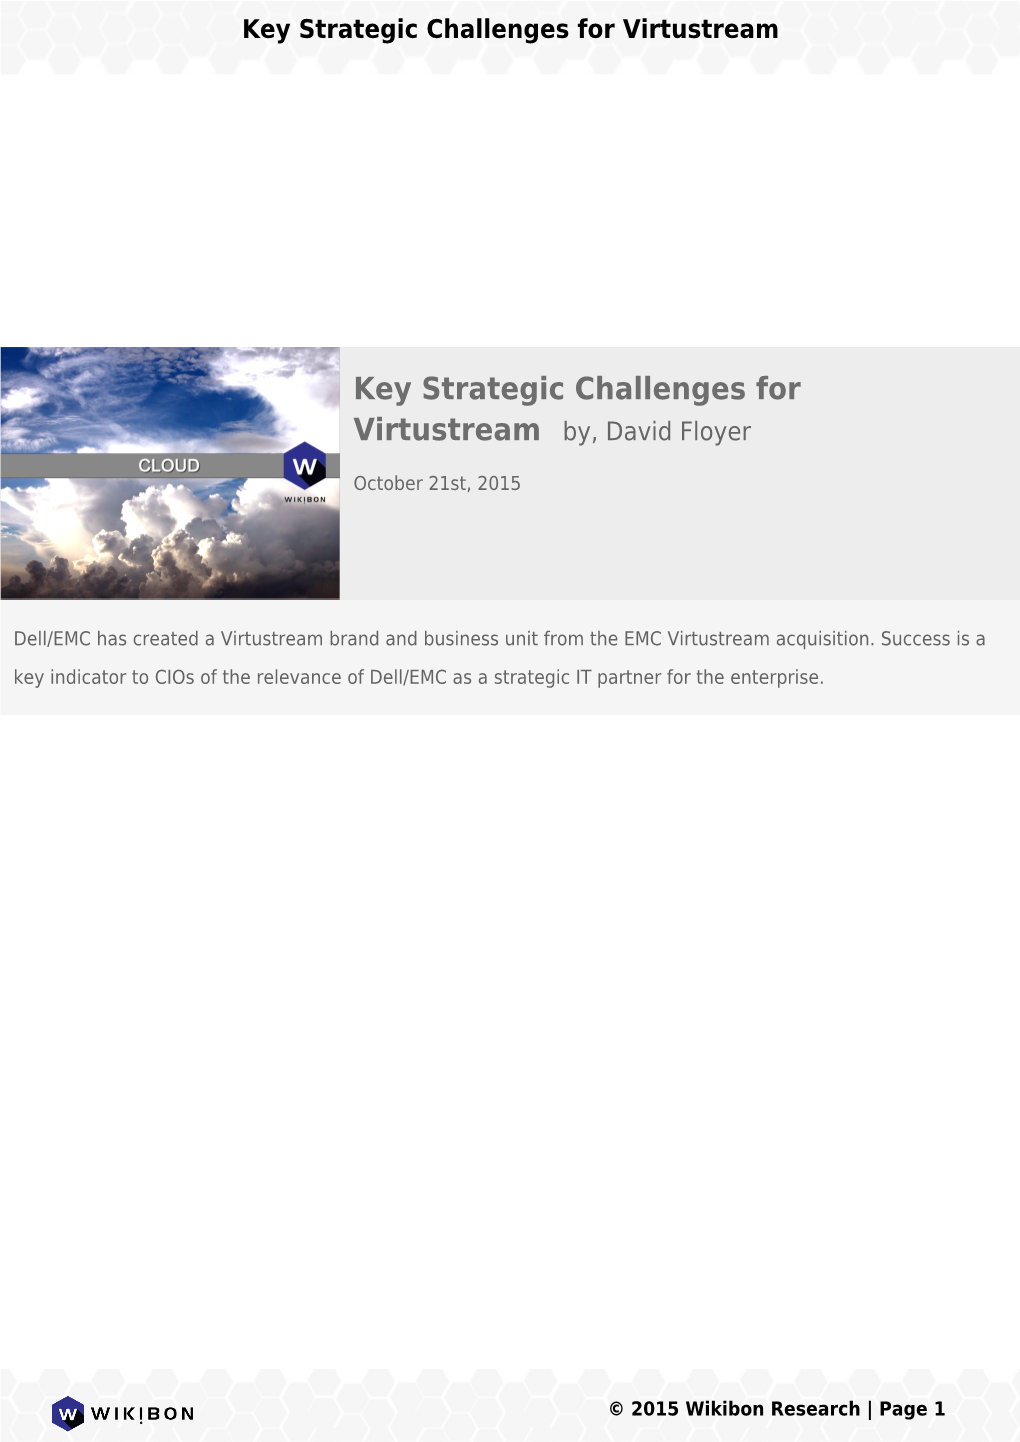 Key Strategic Challenges for Virtustream